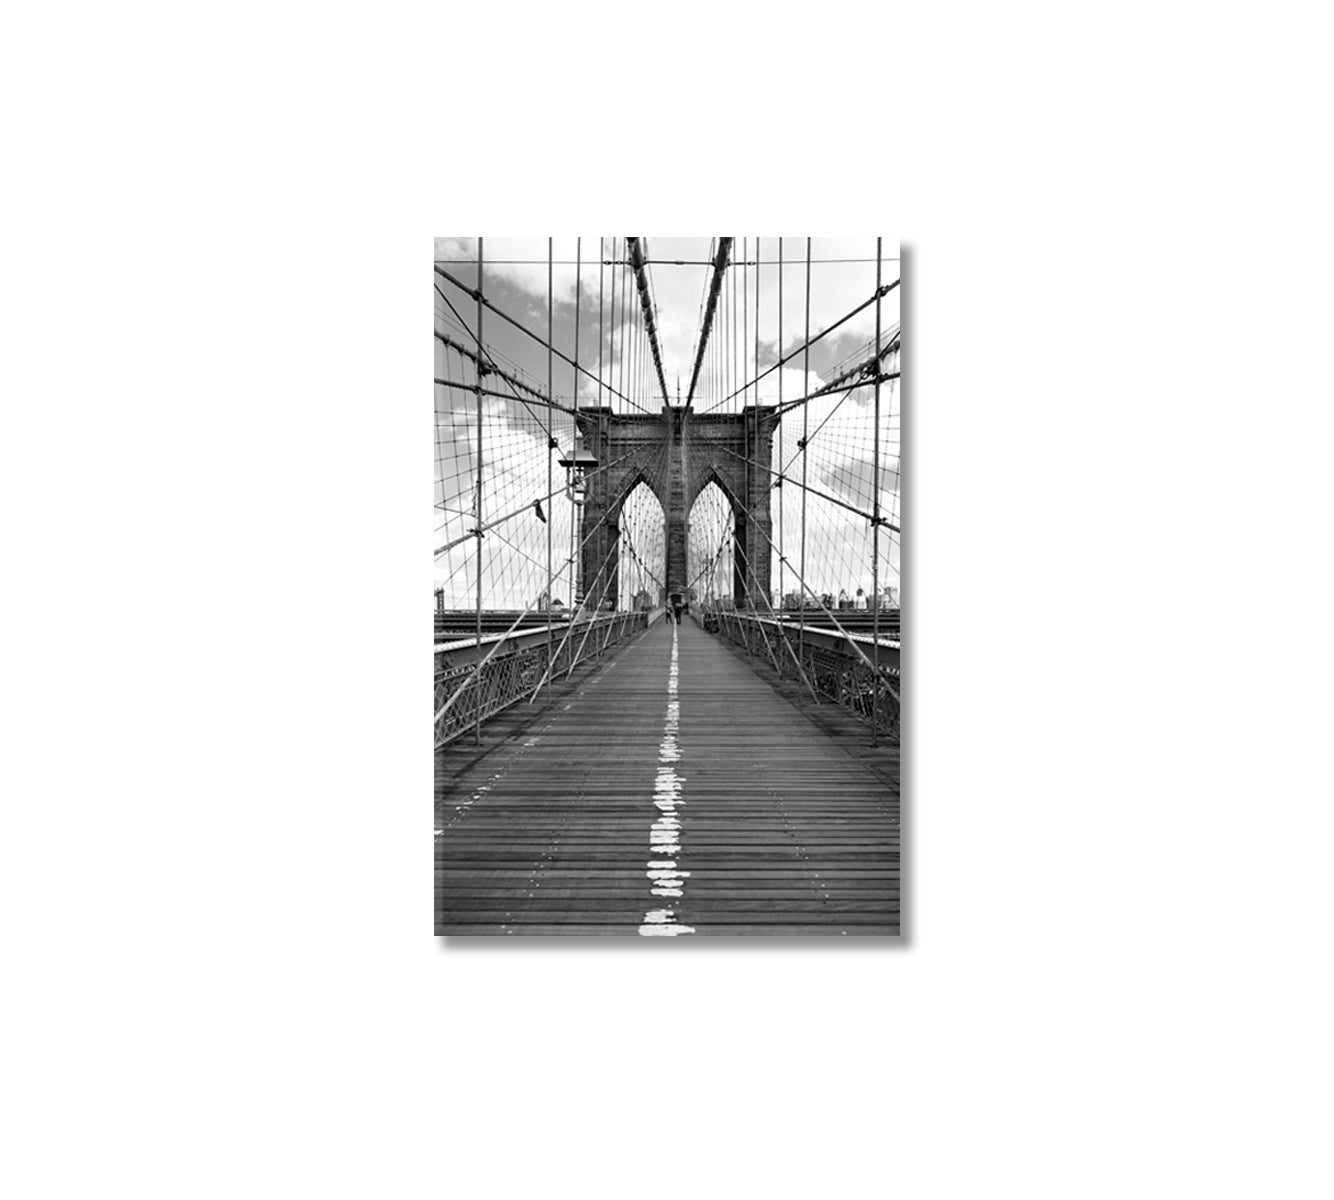 Brooklyn Bridge from Manhattan Art Print-Canvas Print-CetArt-1 panel-16x24 inches-CetArt